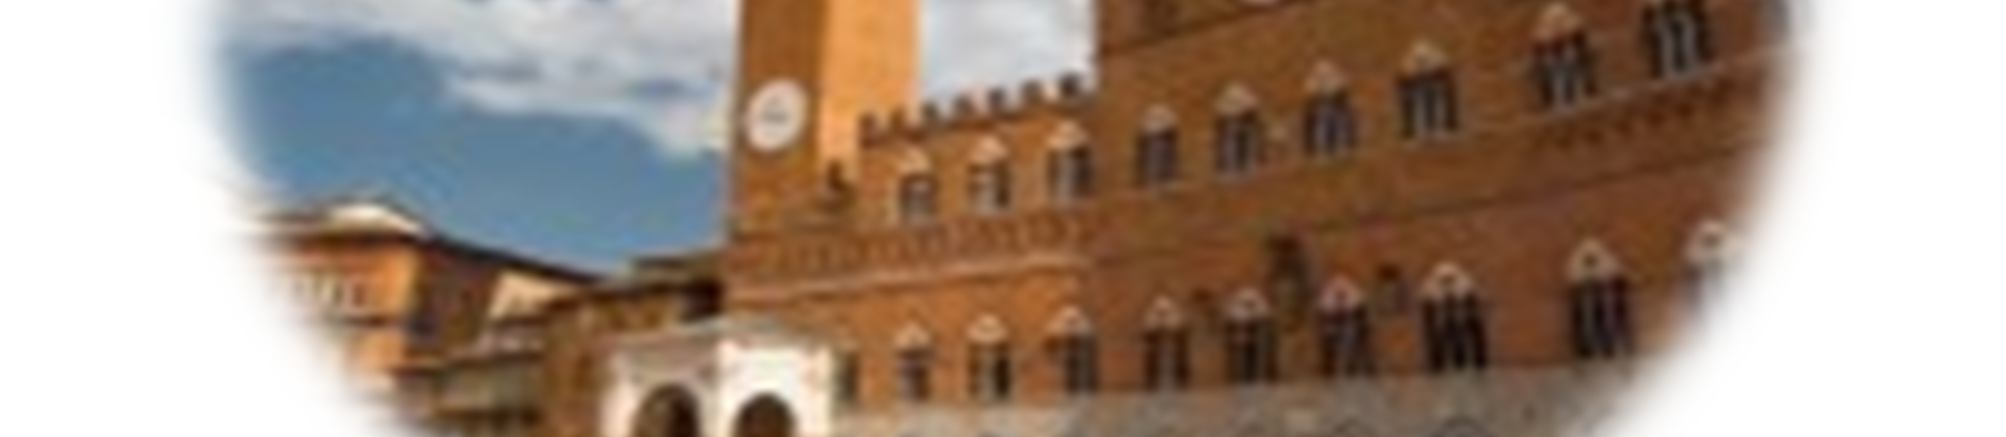 htm 2h.15 minuti da Siena http://www.terresiena.it/ 1h.30 minuti da Firenze http://en.